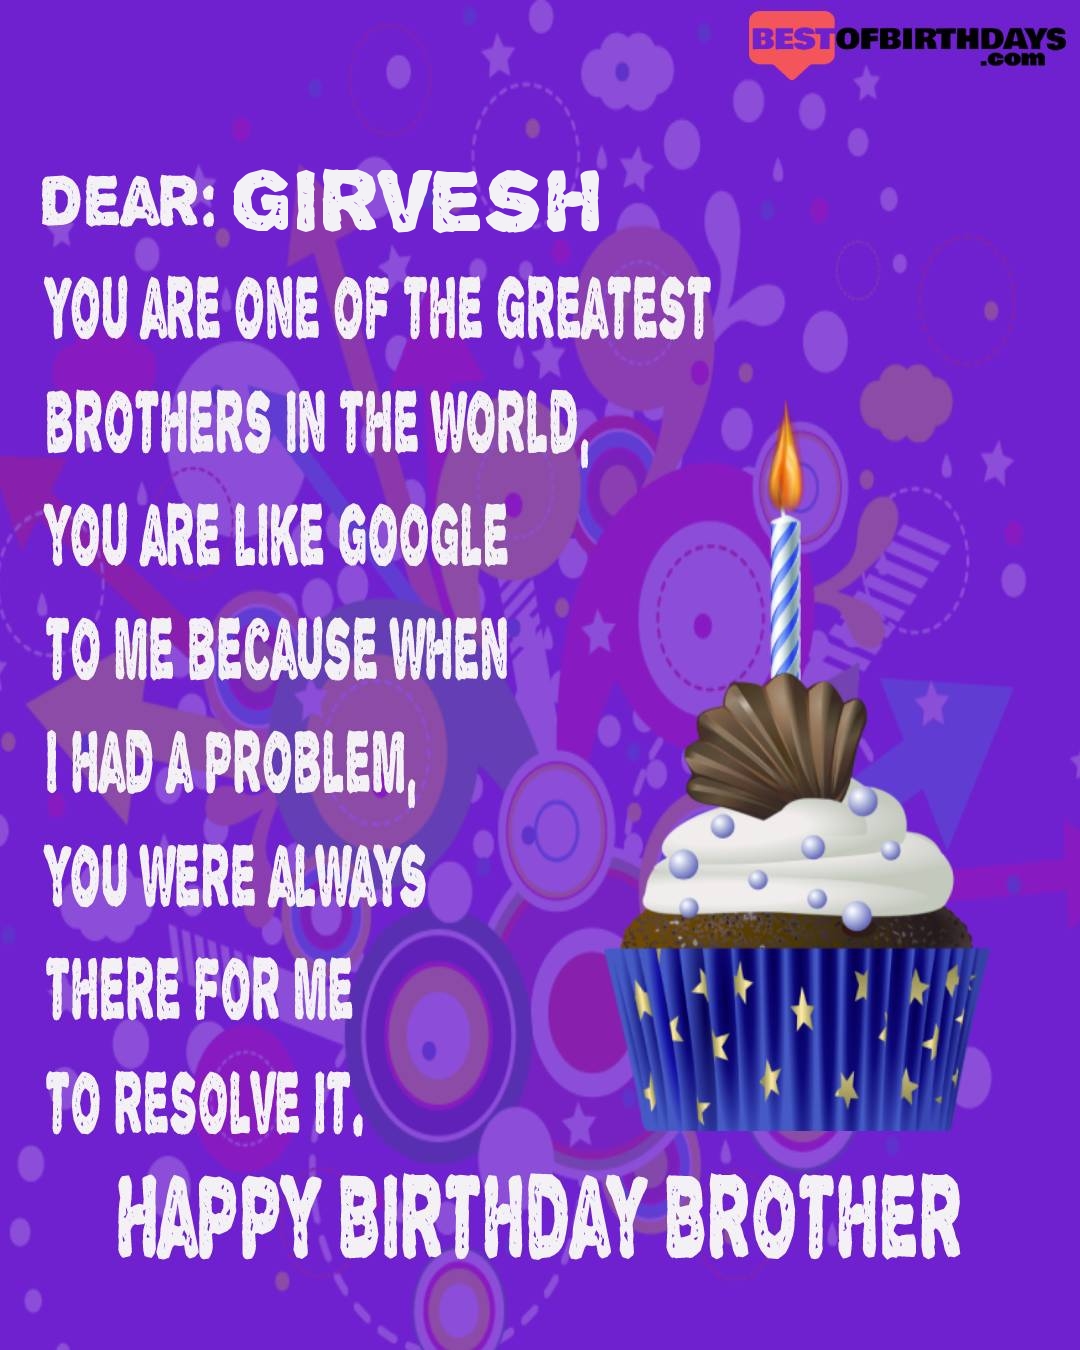 Happy birthday girvesh bhai brother bro